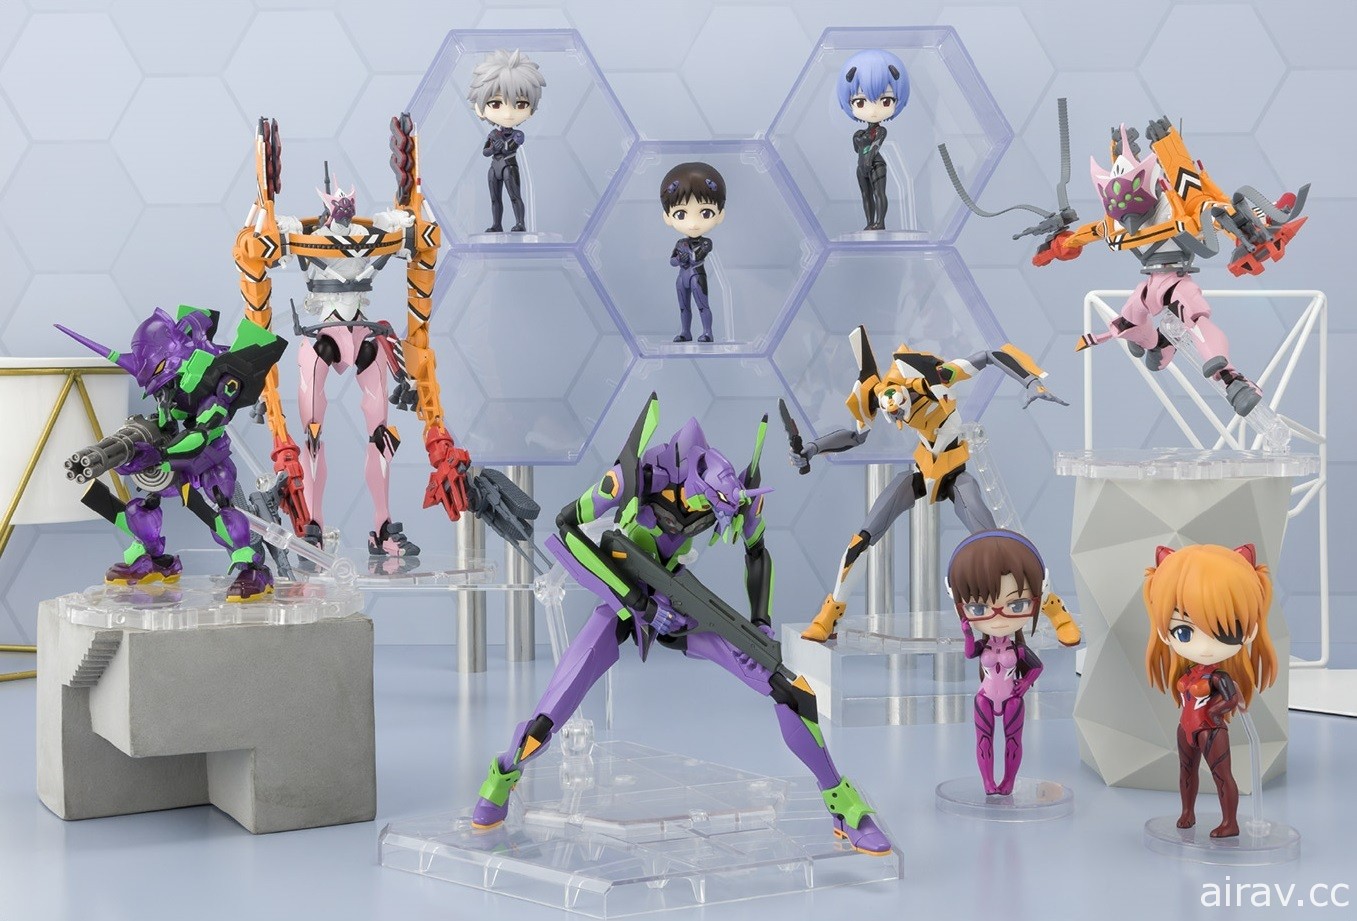 TAMASHII Features 2020 萬代收藏玩具展本週開展 現場將推出多樣新品展示